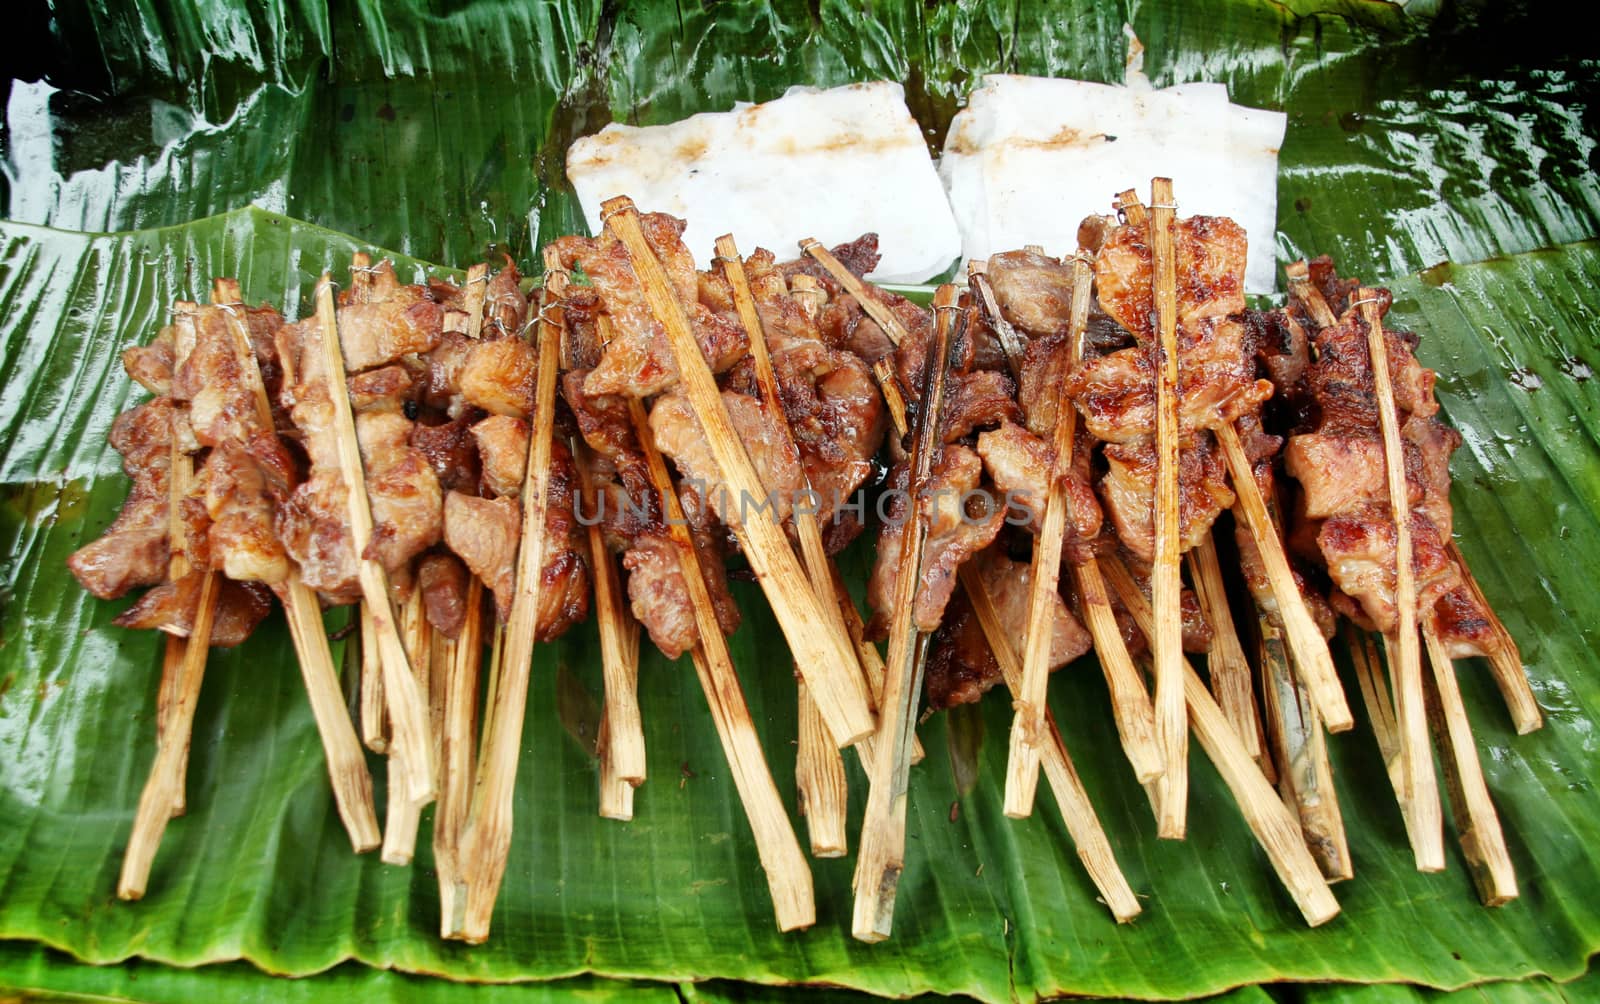 roasted pork with wood stick and sticky rice on banana leaf by yanukit